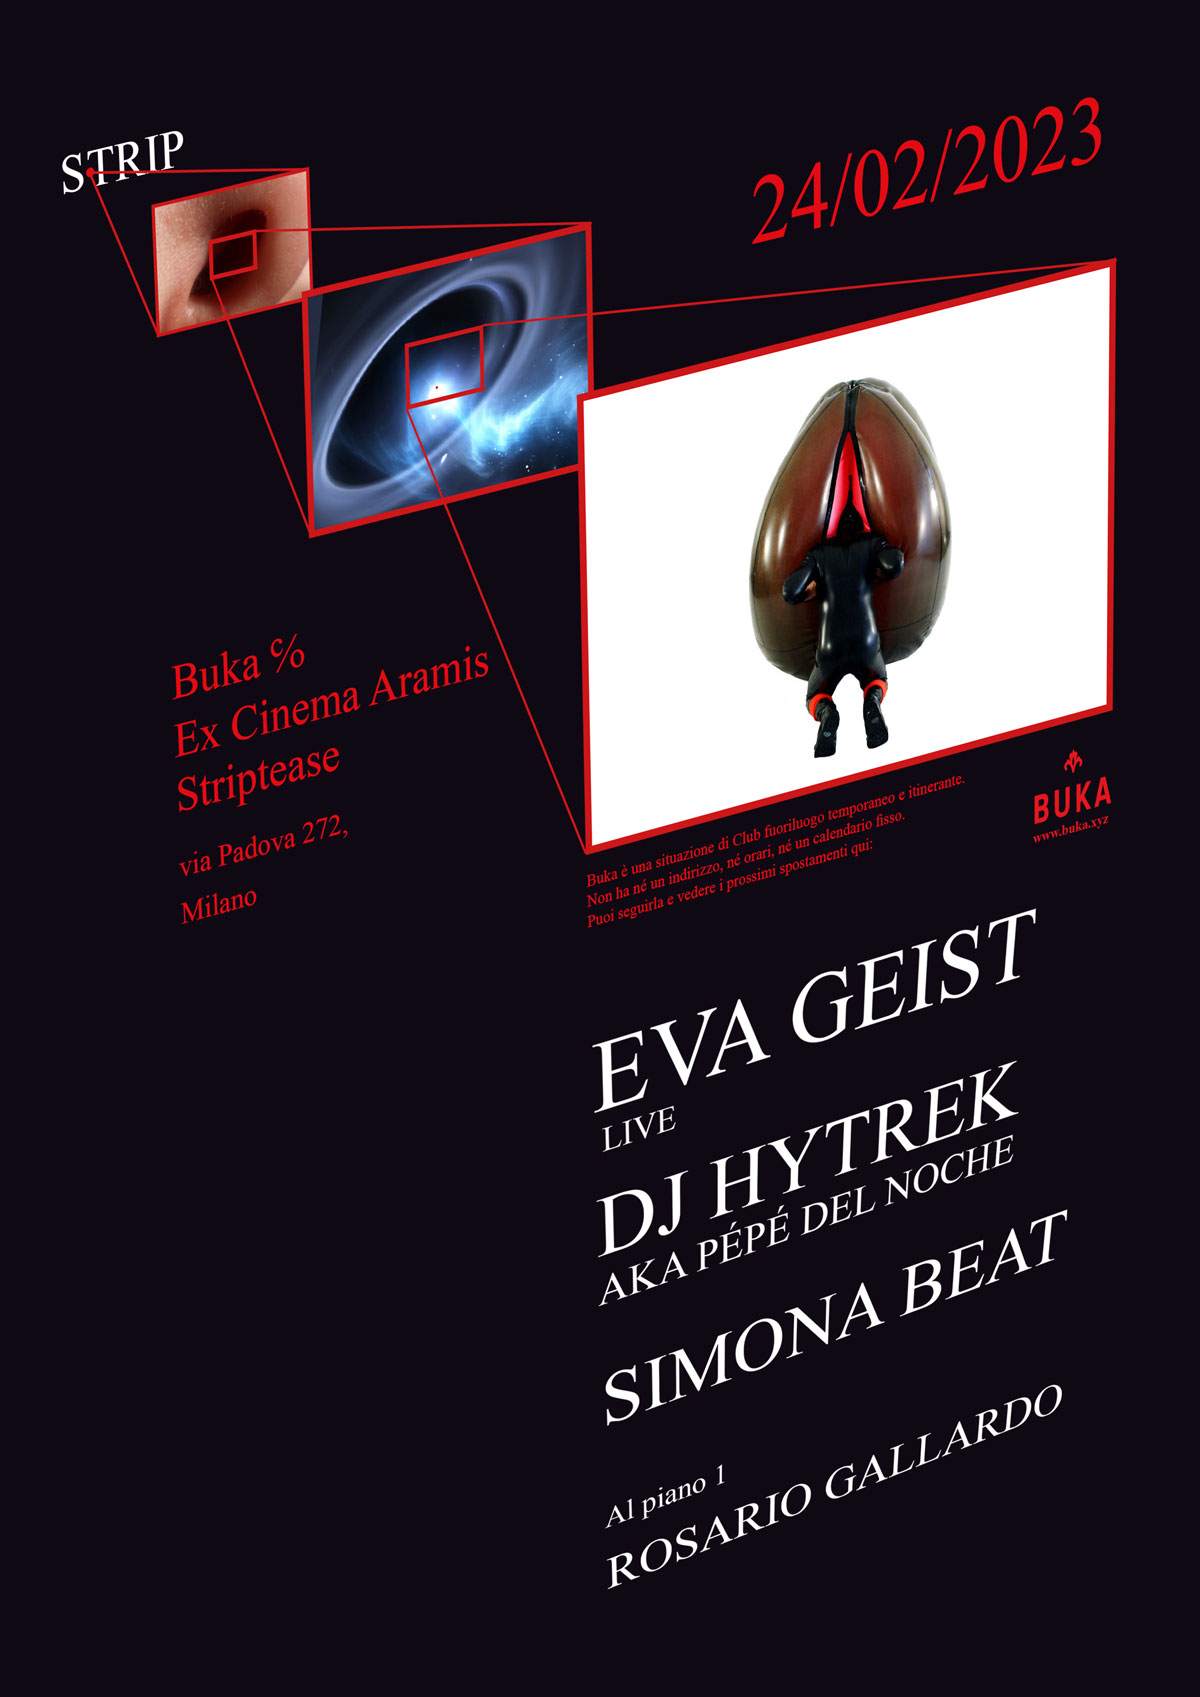 BUKA - Strip: Eva Geist (live), Dj Hytrek a.k.a Pépé Del Noche, Simona Beat, Rosario Gallardo - フライヤー表